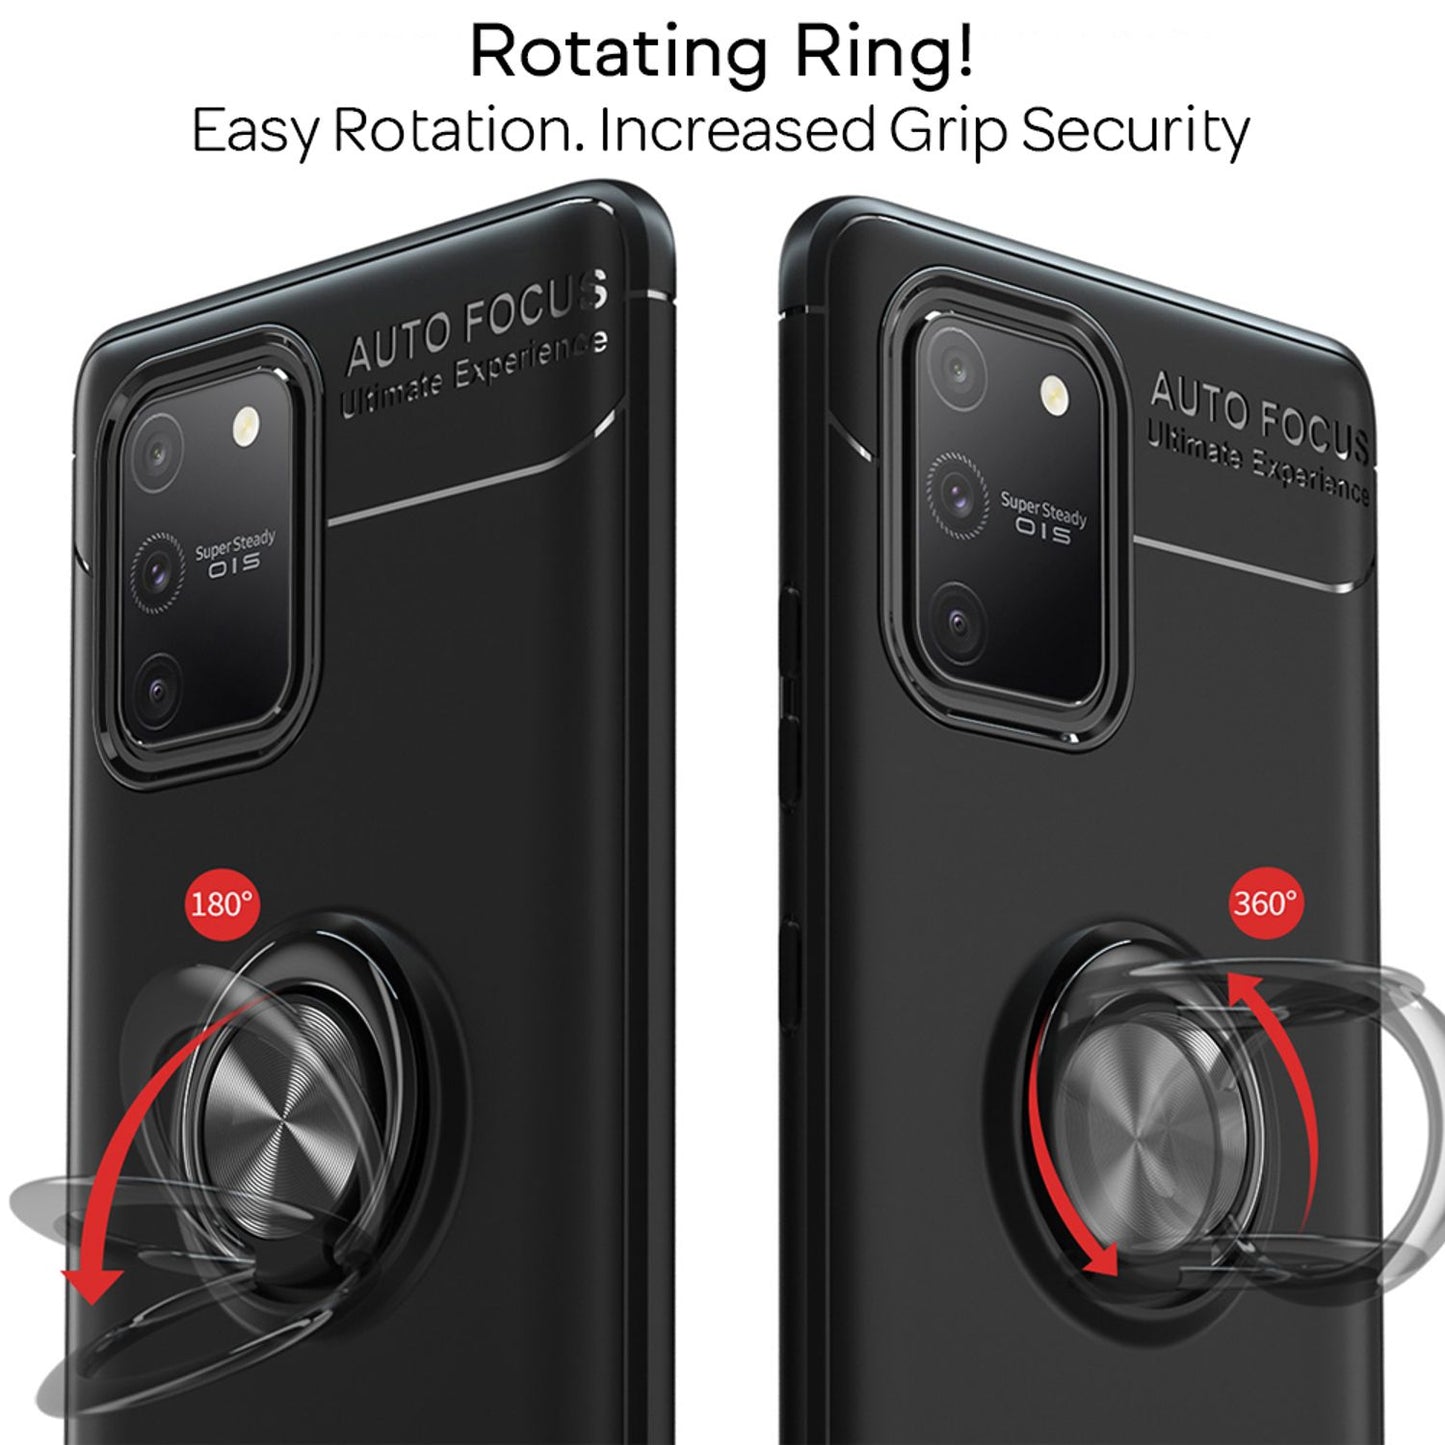 NALIA 360° Ring Handy Hülle für Samsung Galaxy S10 Lite, Silikon Cover Case Etui